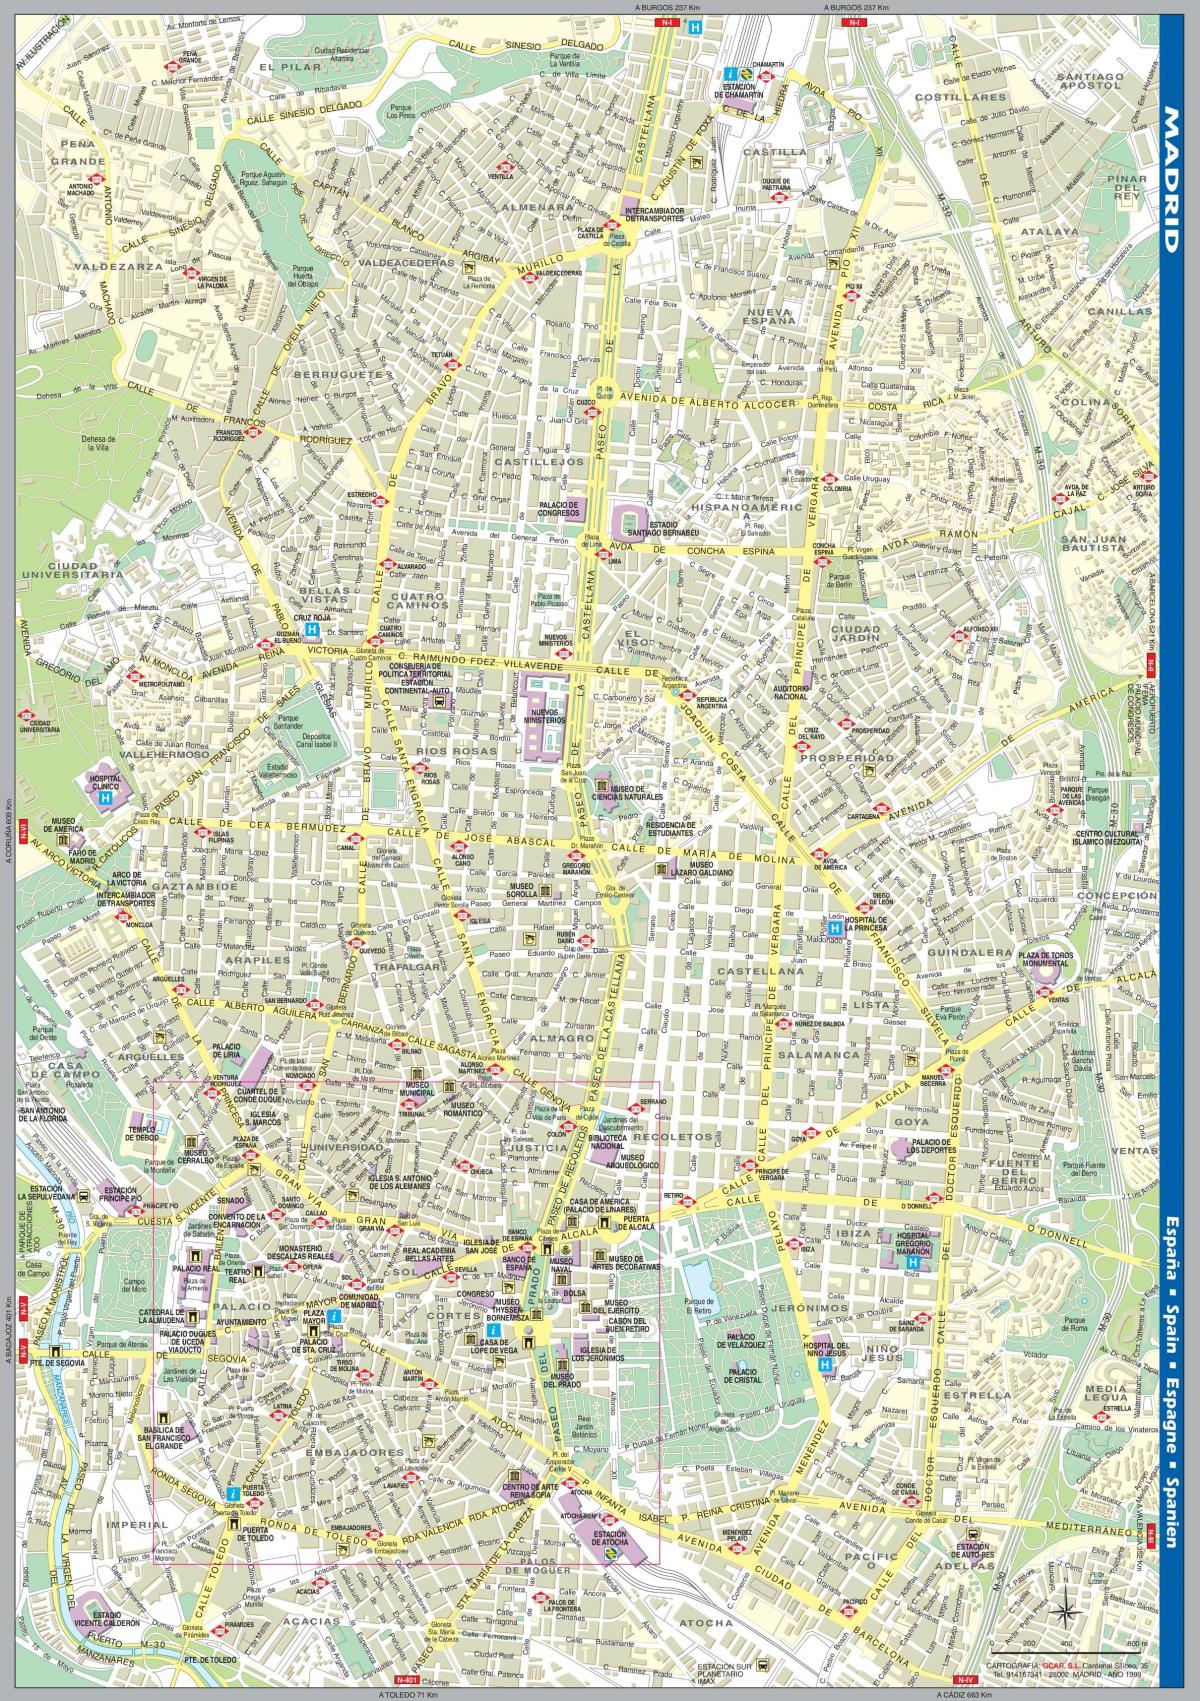 street kart over Madrid sentrum